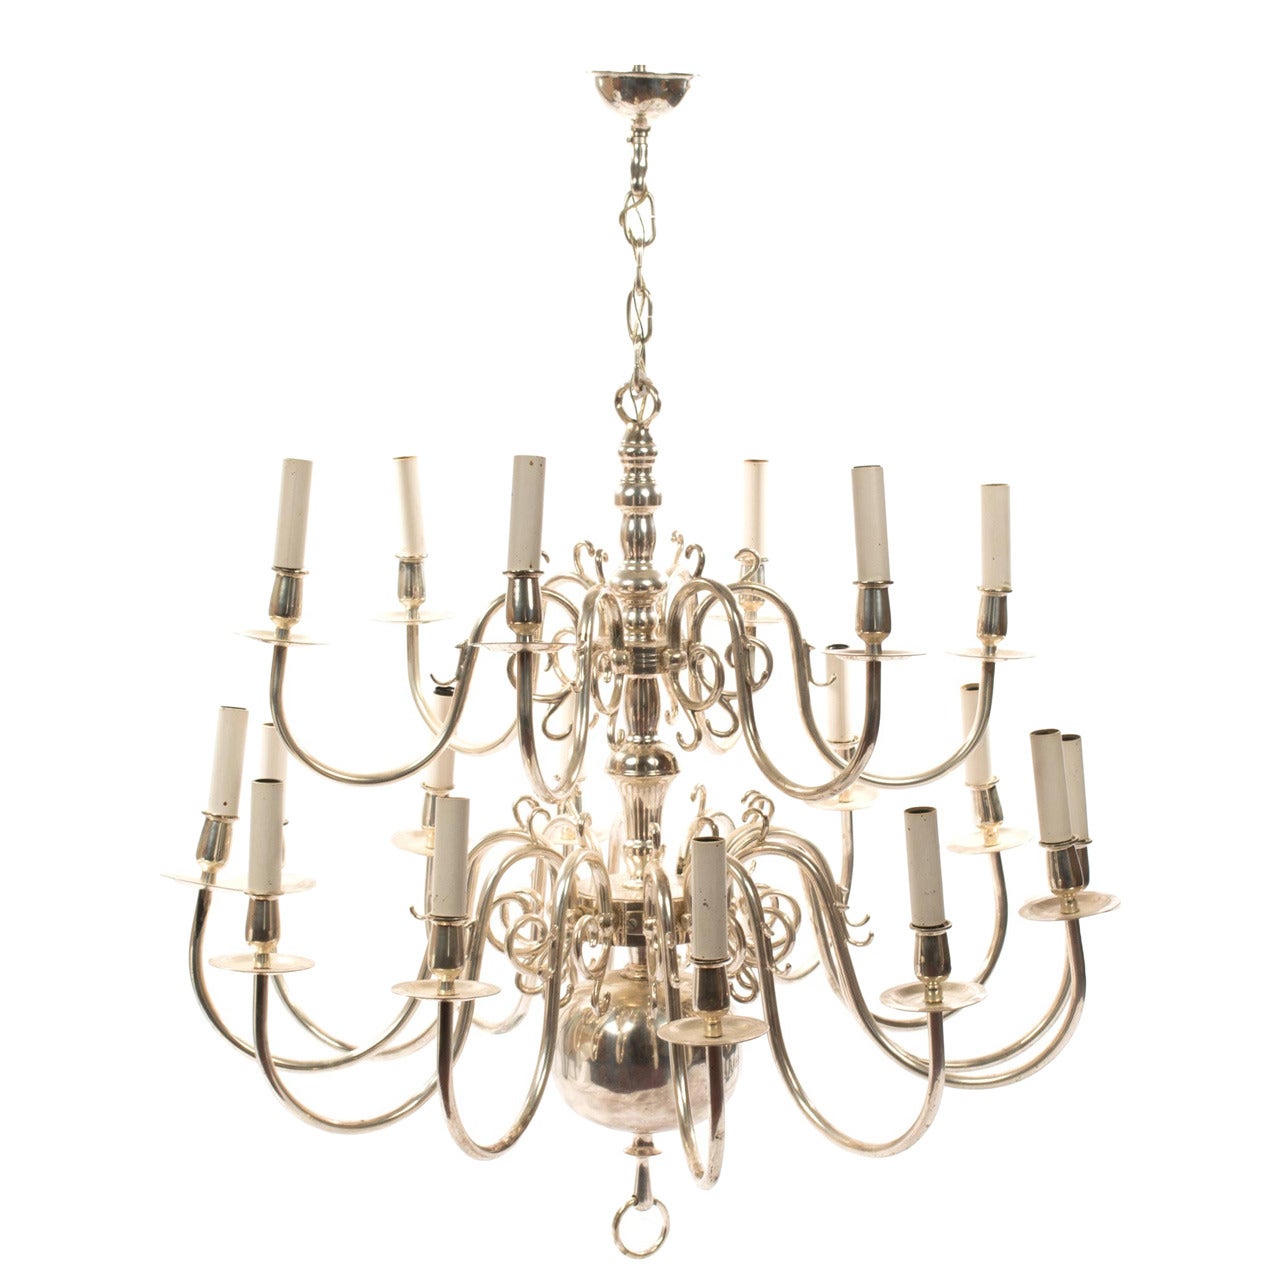 A George III style eighteen light chandelier